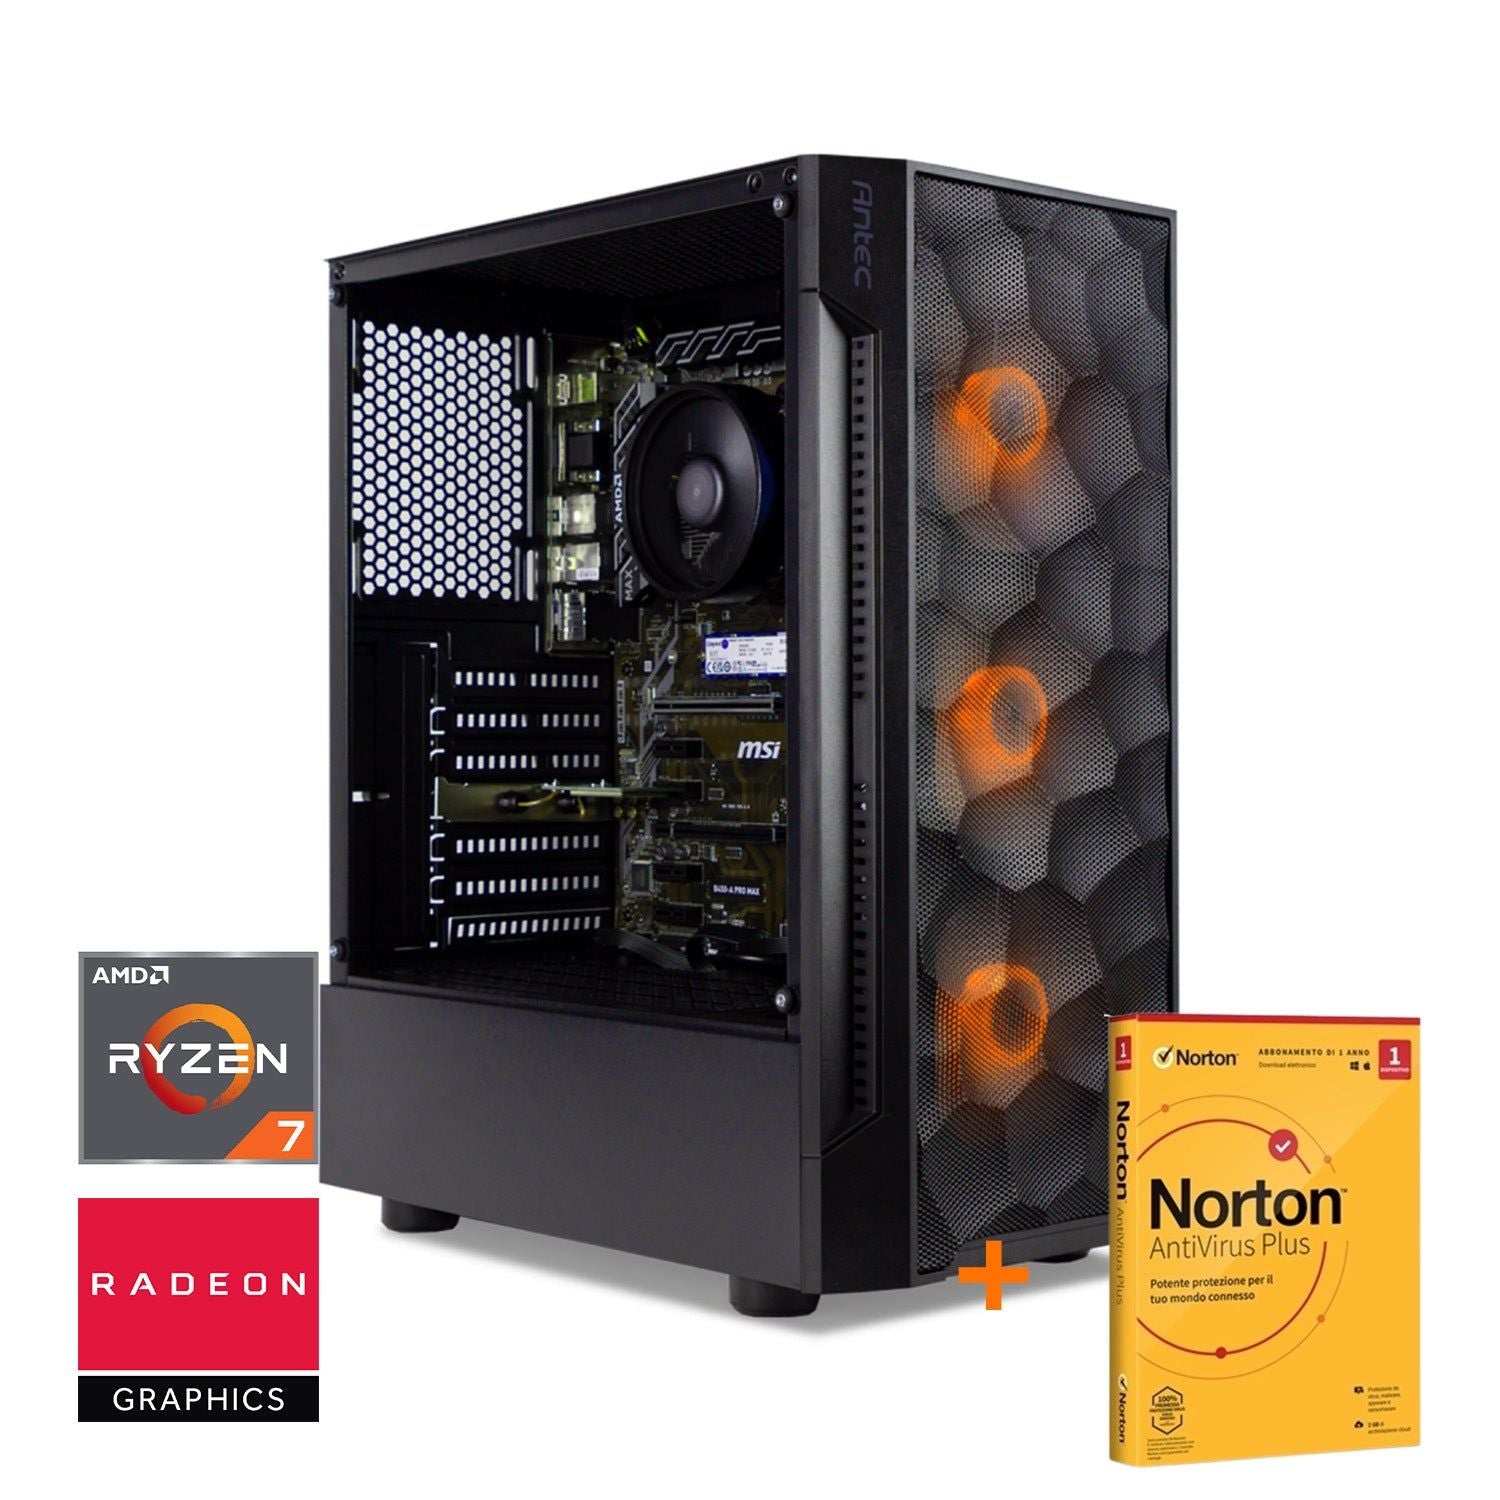 OVERCLOCK Rapid Office 5 + Norton Antivirus 1 Year - PC Gaming AMD Ryzen 5 5600g, 16gb ddr4 3200mhz, 512gb, APU Radeon Graphics 7, Win 11 Pro - OVERCLOCK Computer